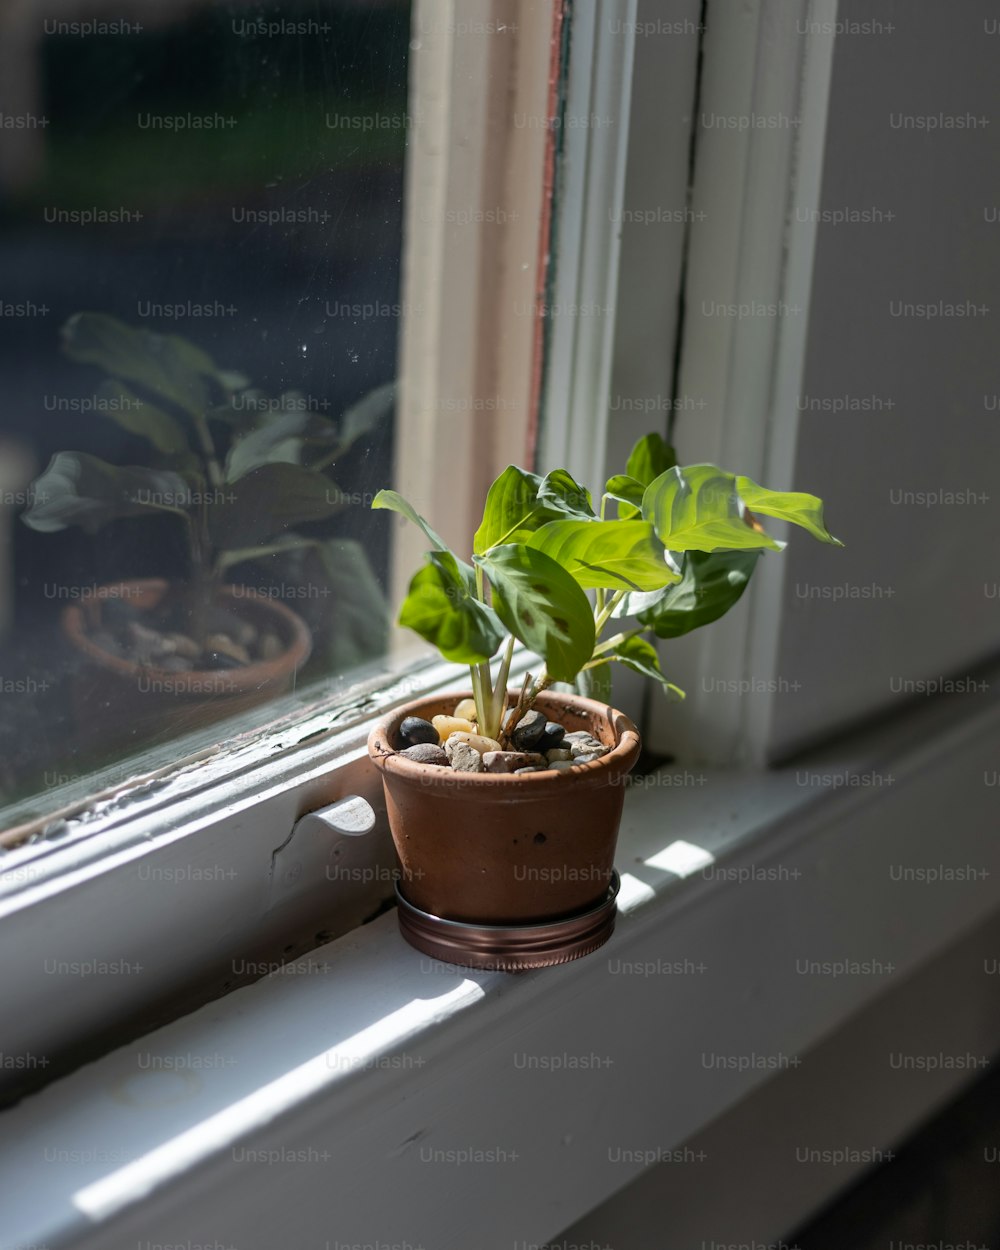 una planta en maceta sentada en el alféizar de una ventana